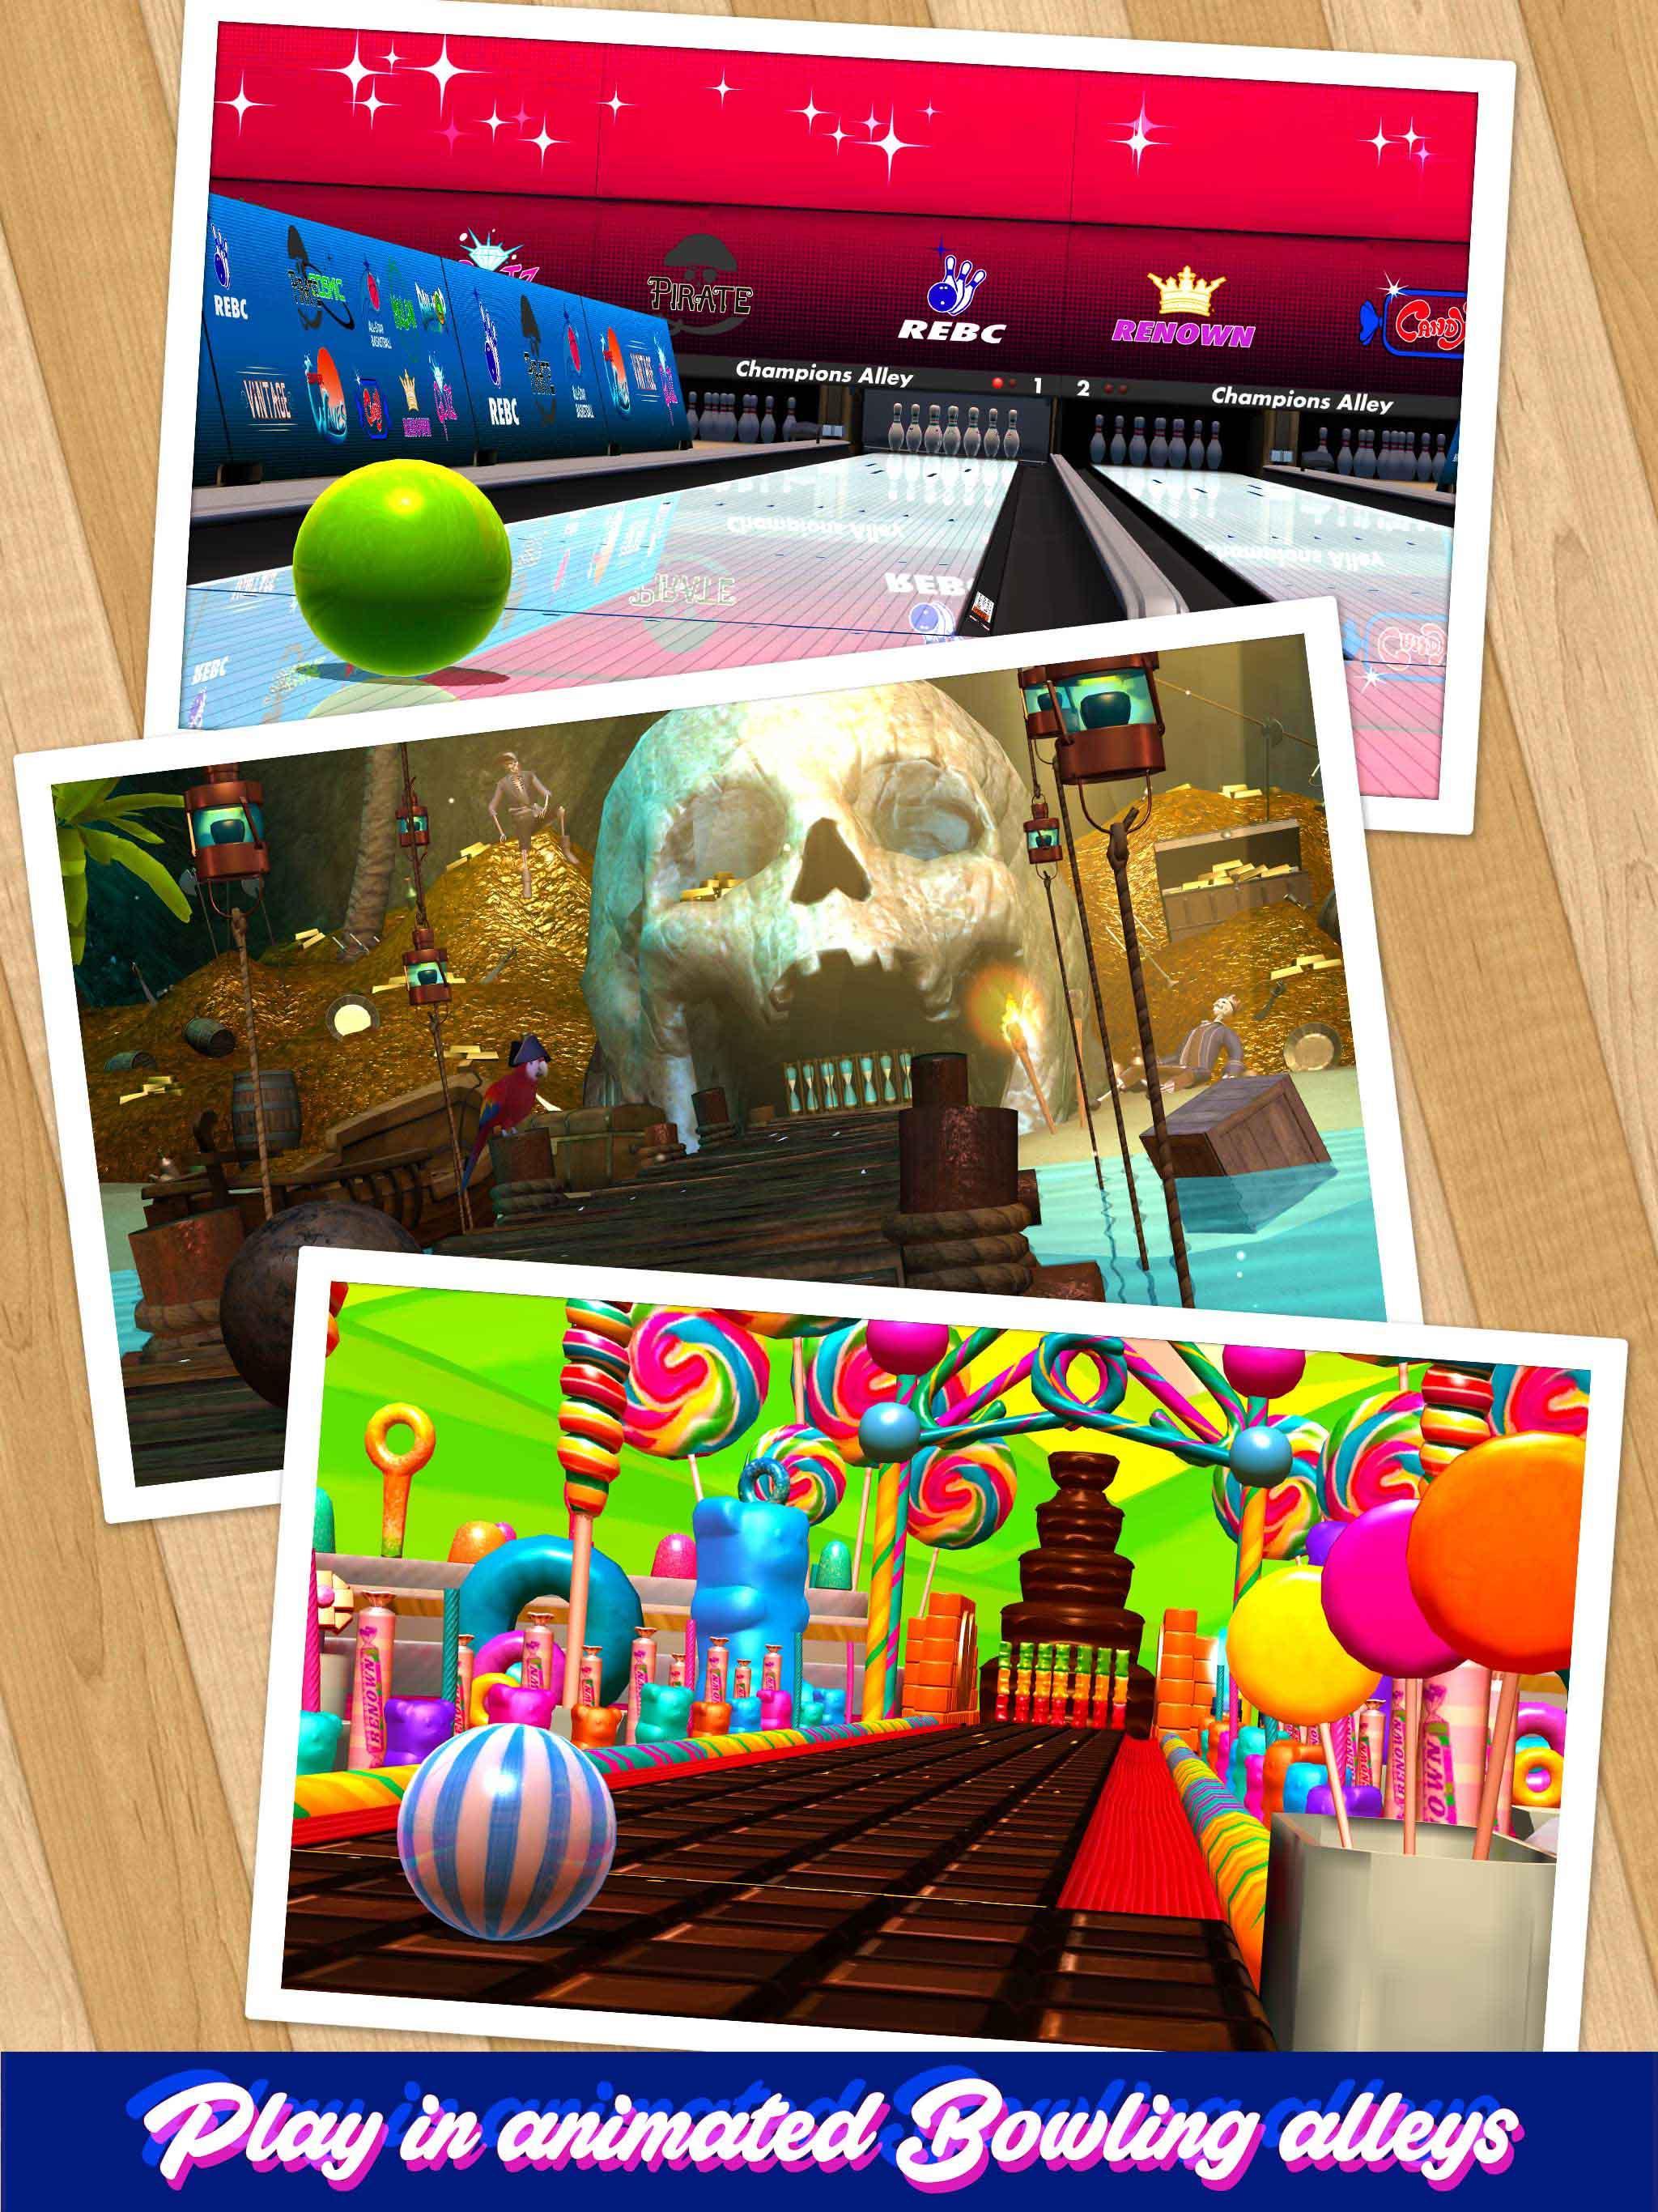 Bowling Go! - Best Realistic 10 Pin Bowling Games 0.3.0.1512 Screenshot 14